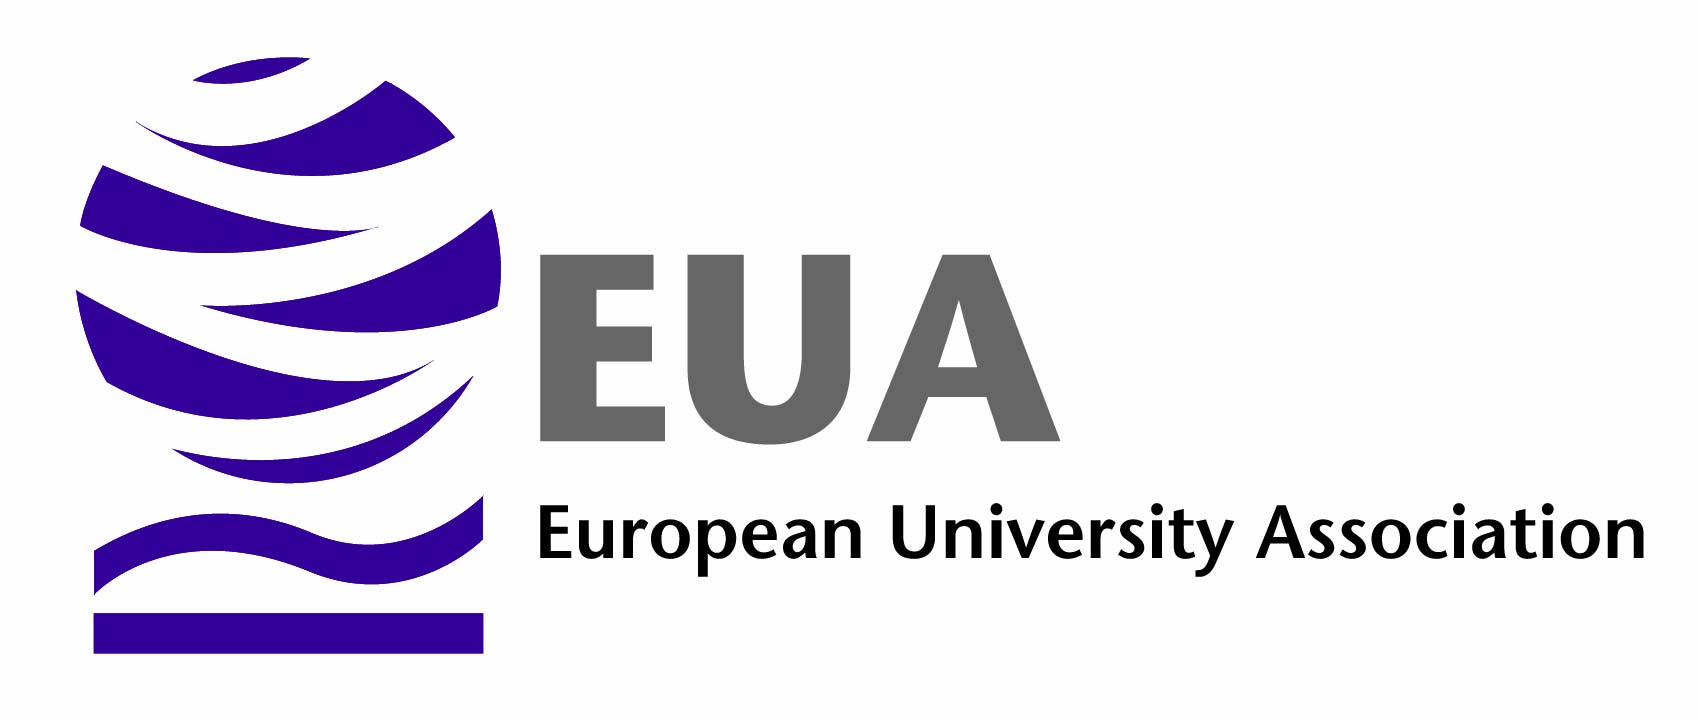 USA European University Association